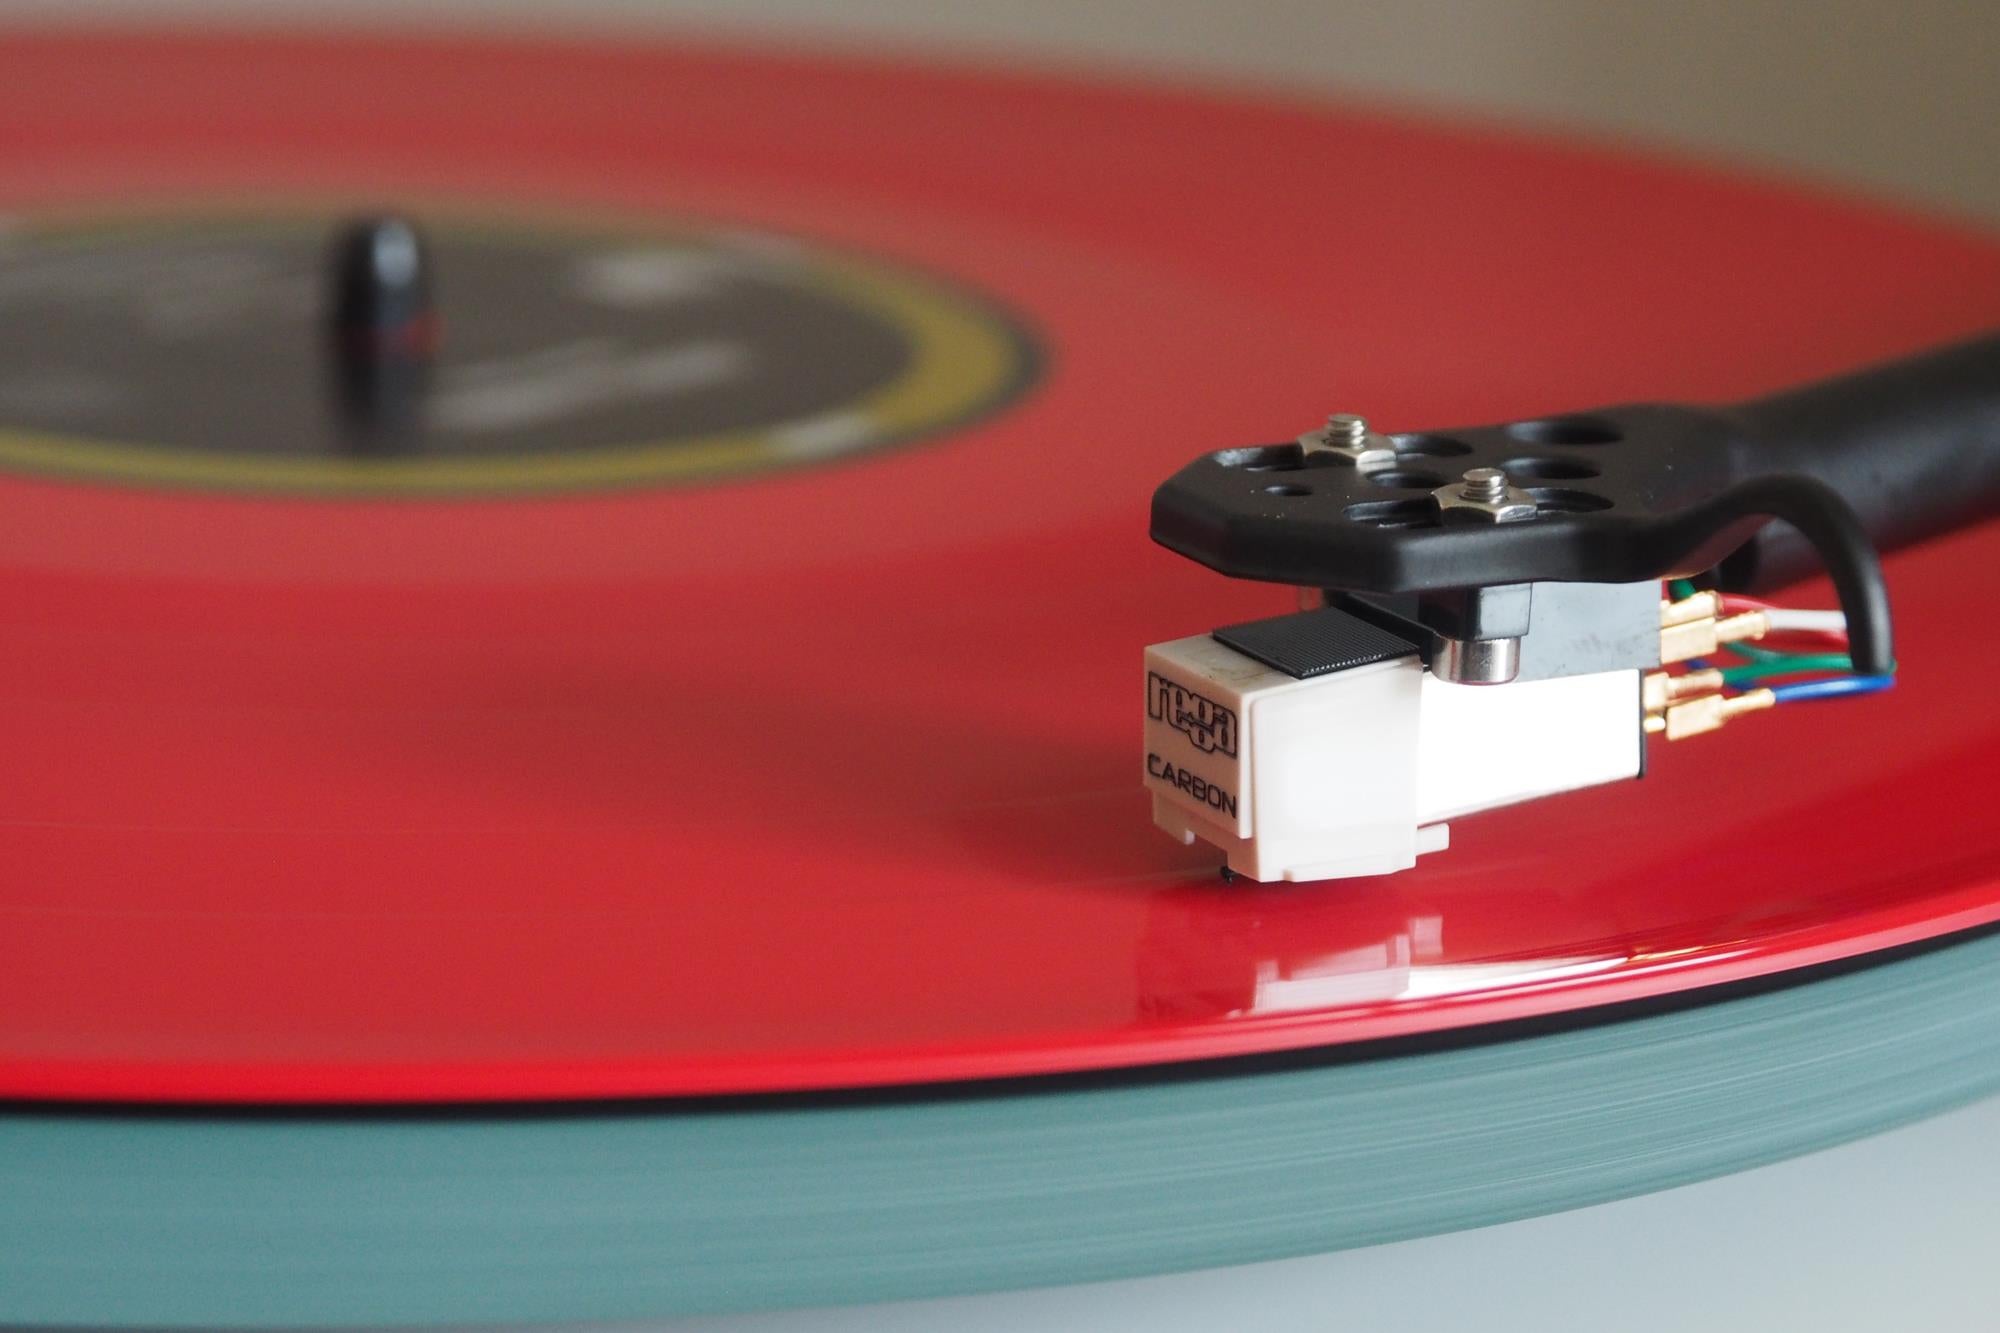 Close-up of Rega Planar 2 turntable needle on red vinyl record.